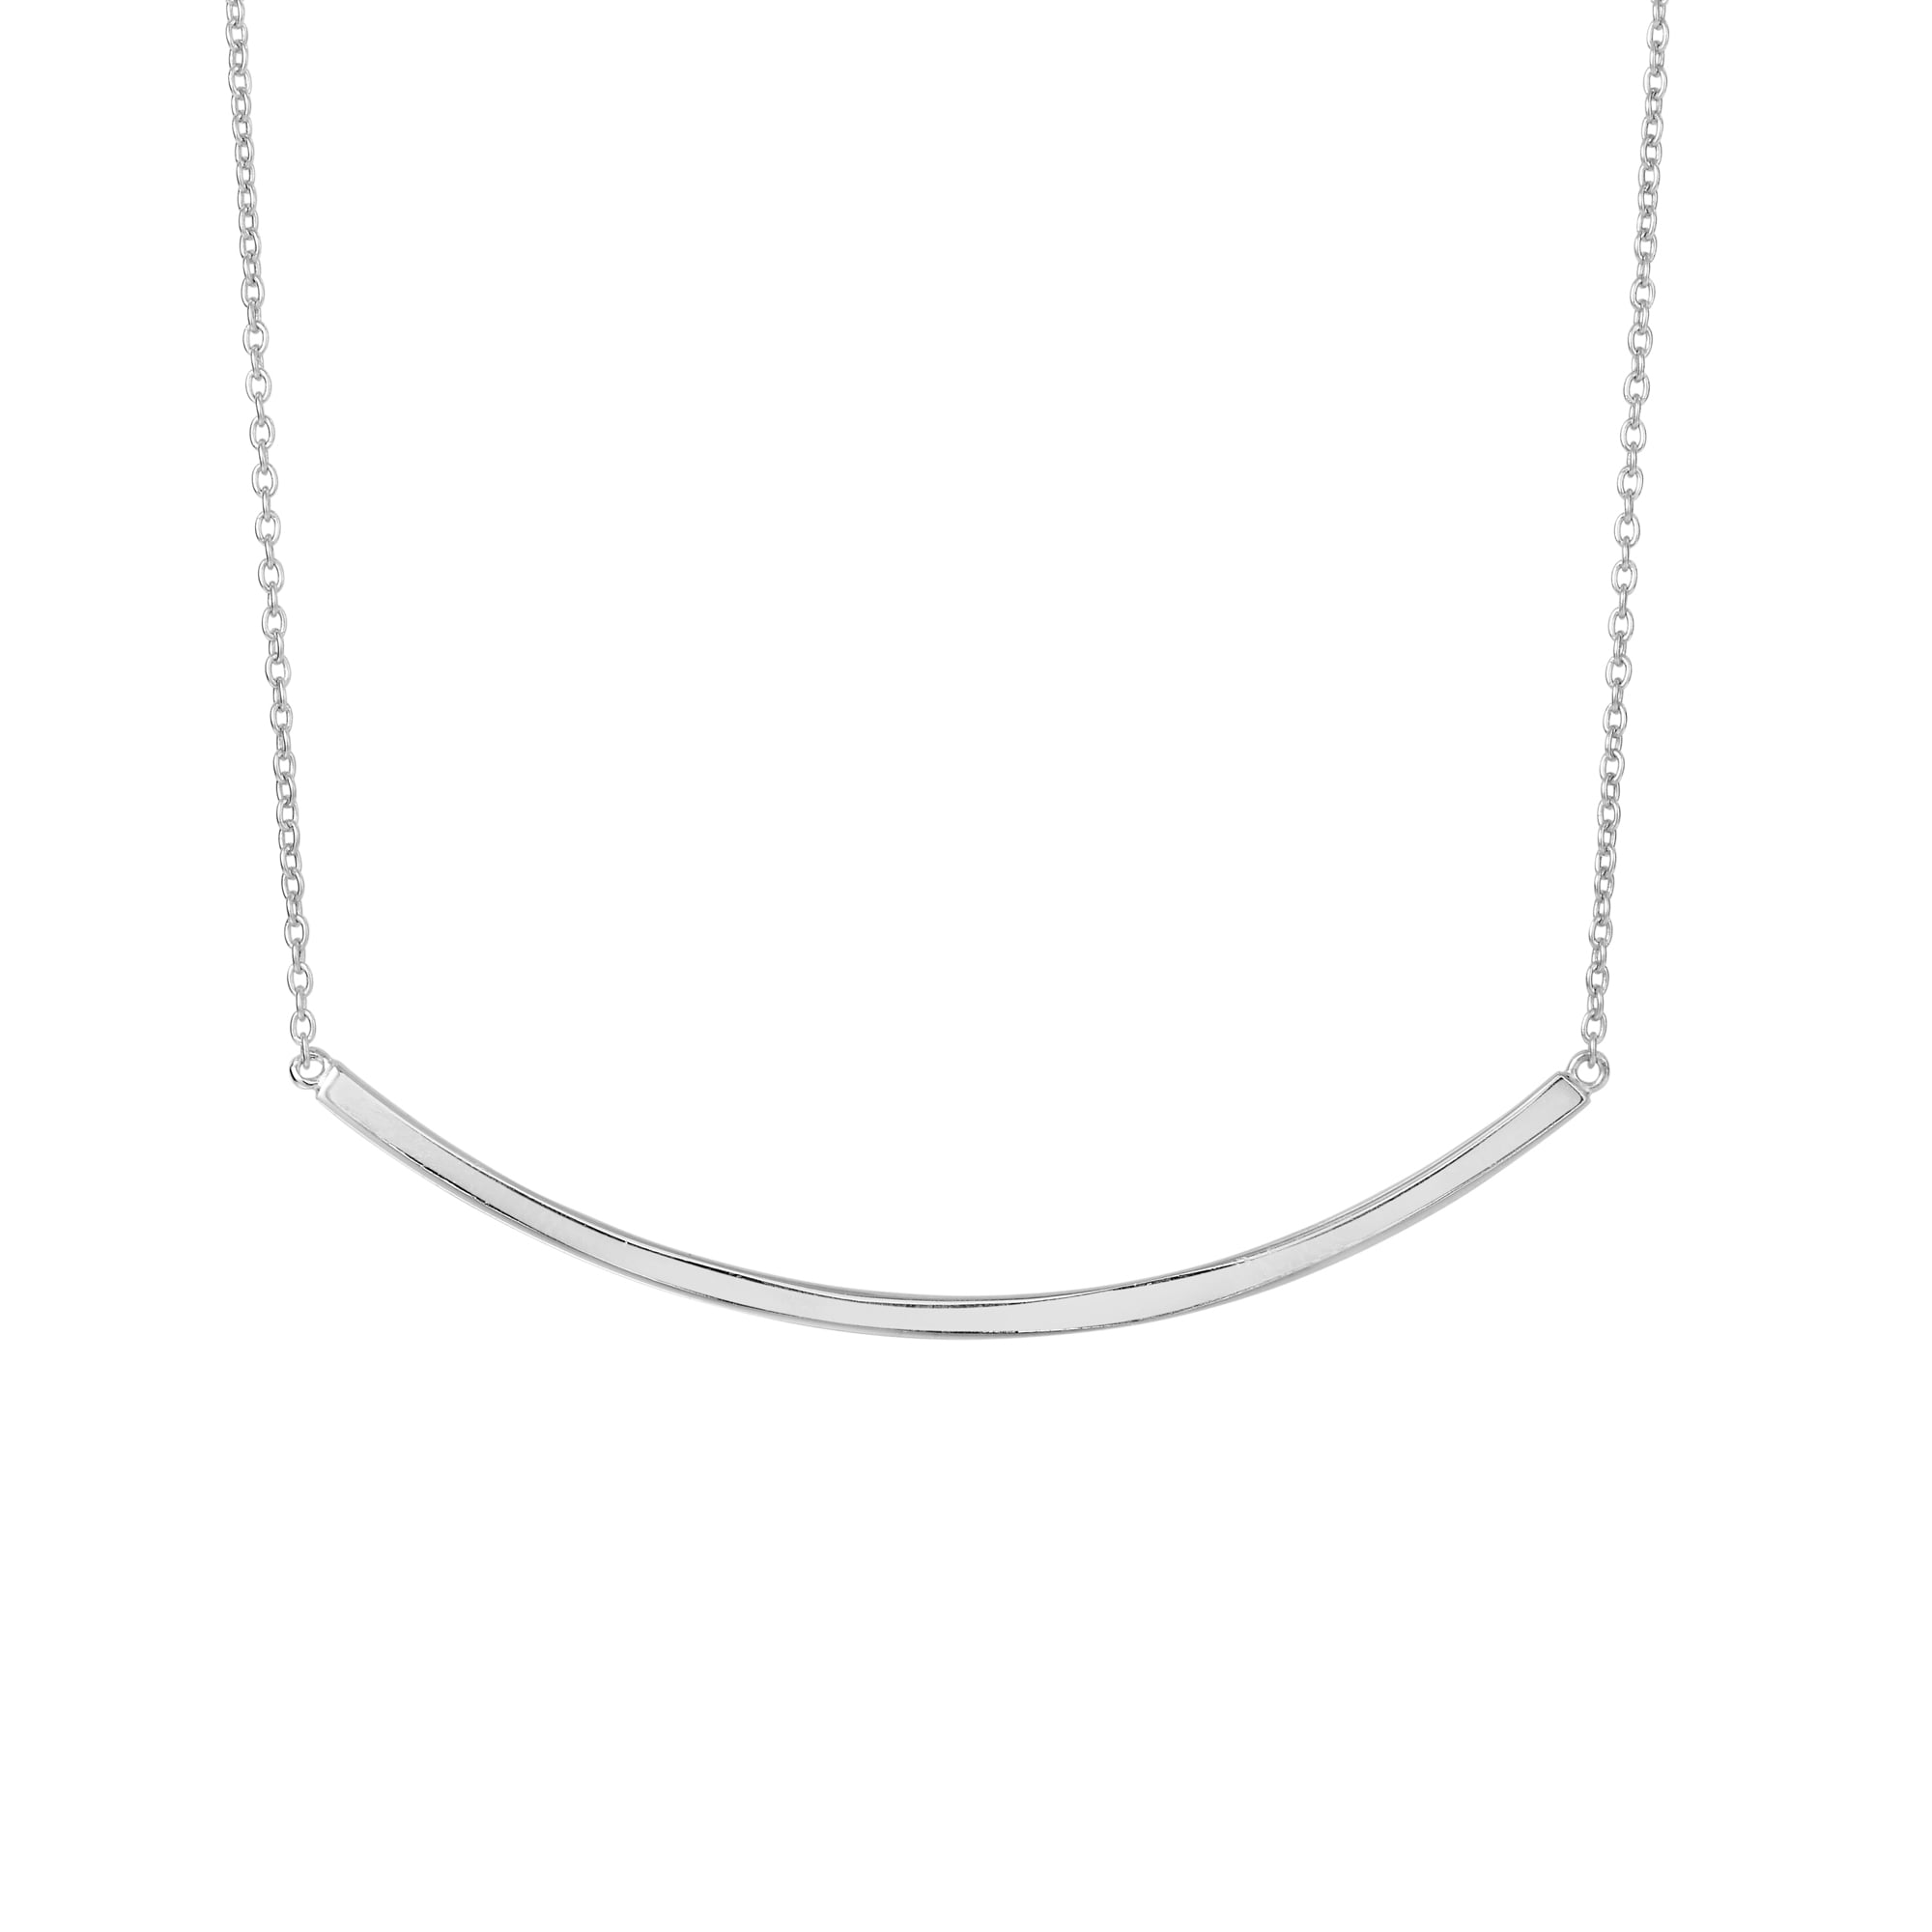 Sterling Silver Sideways Curve Bar Pendant Necklace, 18